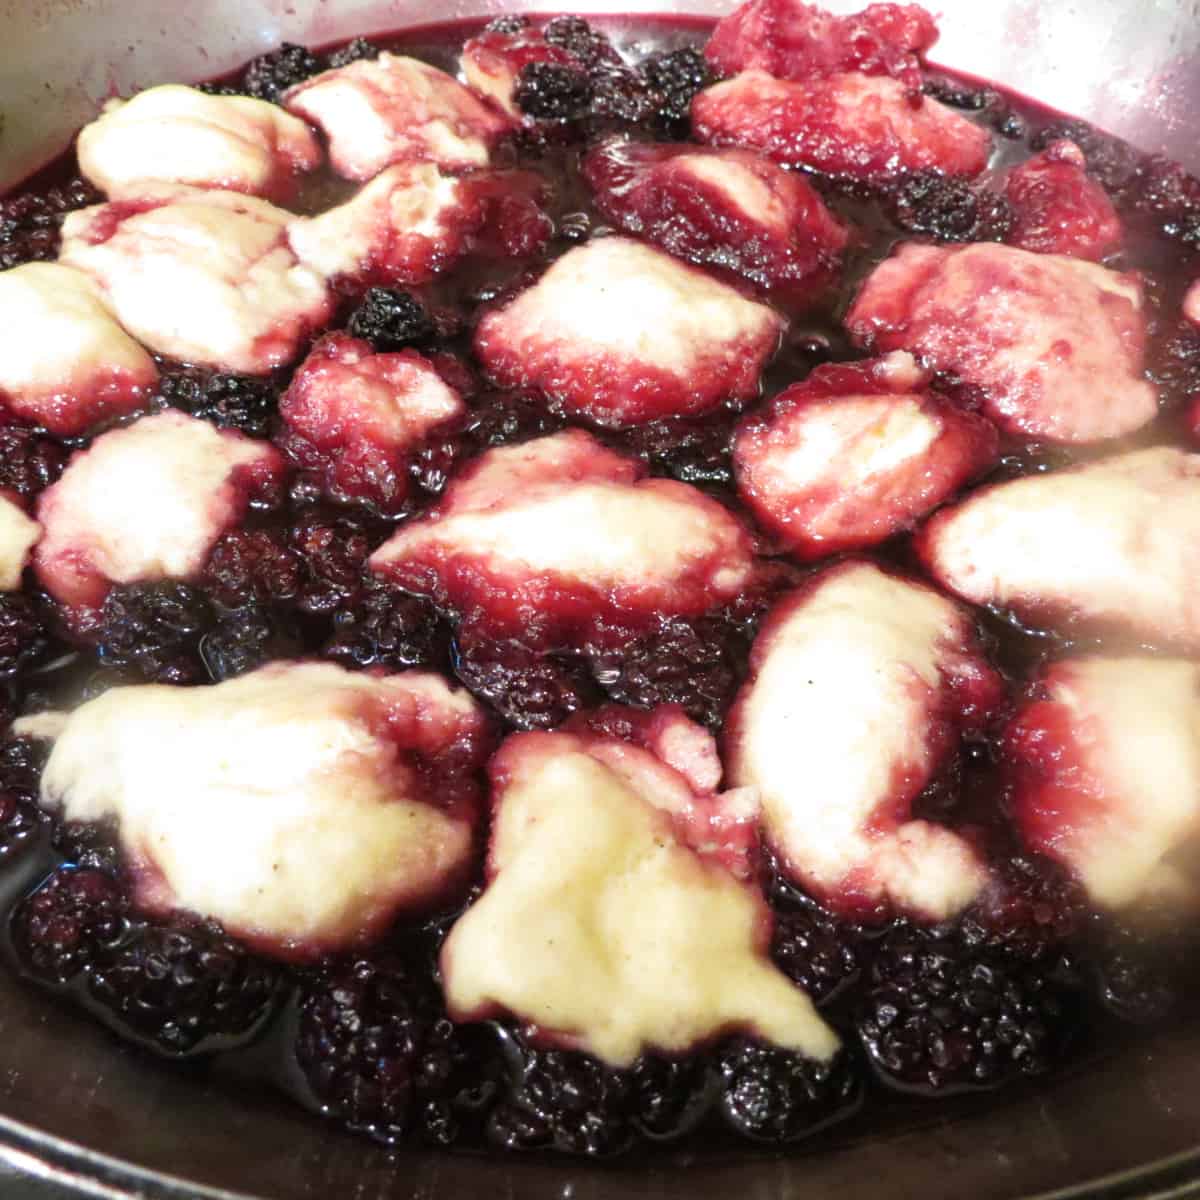 A saucepan of uncooked blackberry dumplings.